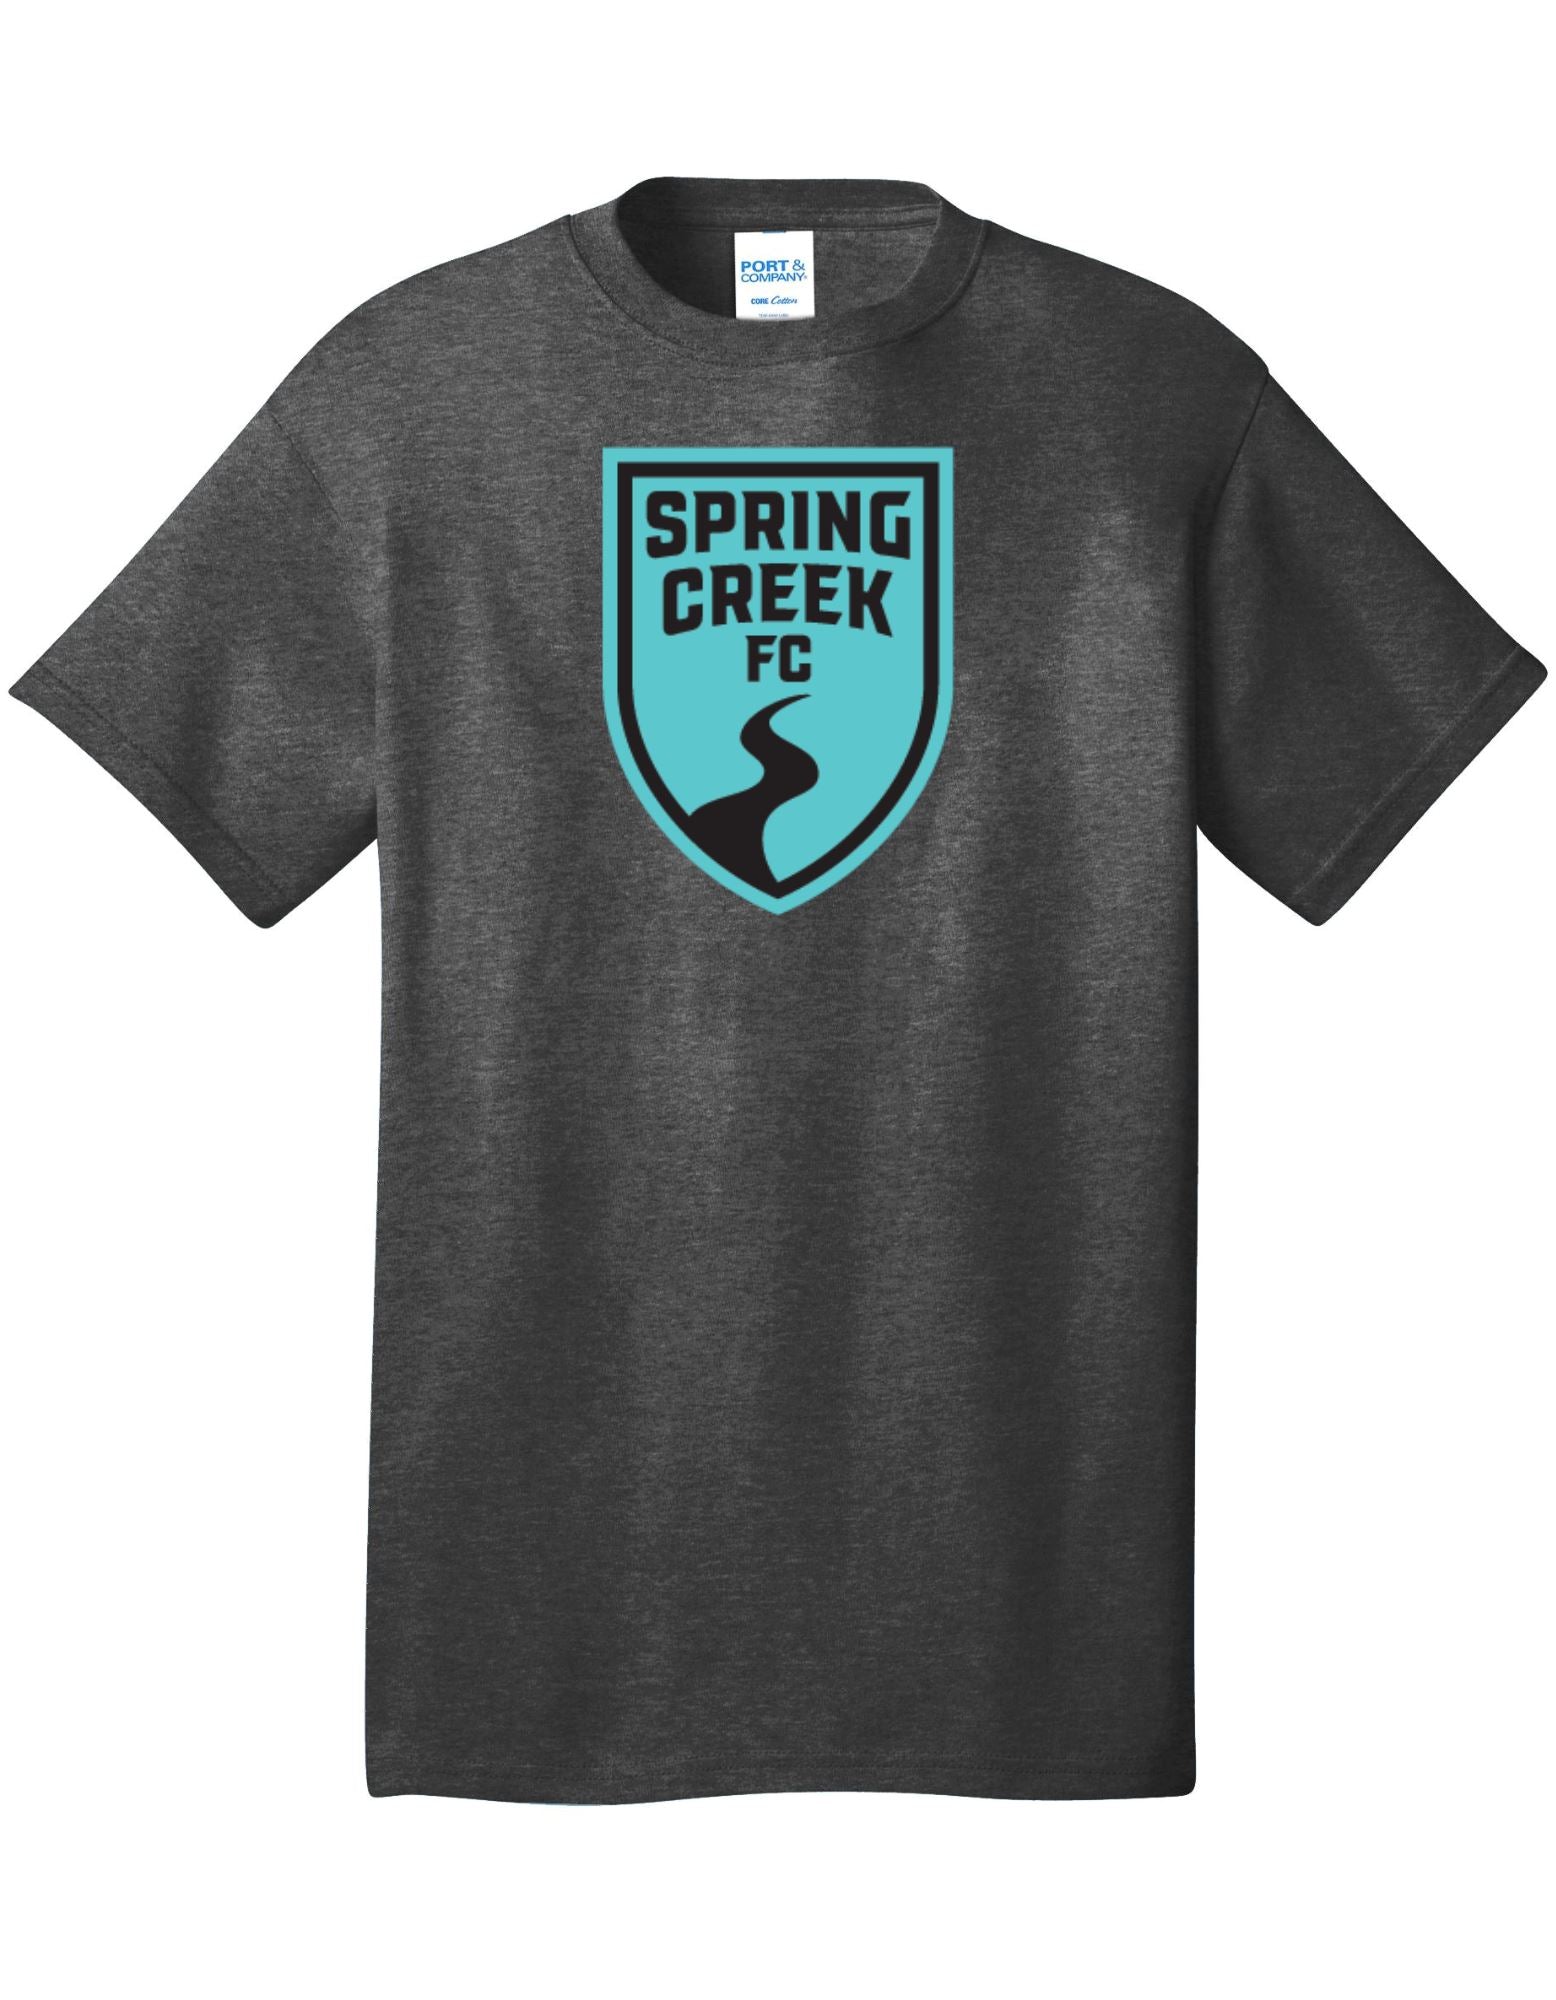 Spring Creek FC | Men's Short Sleeve t-shirt Goal Kick Soccer Charcoal Men's Small 